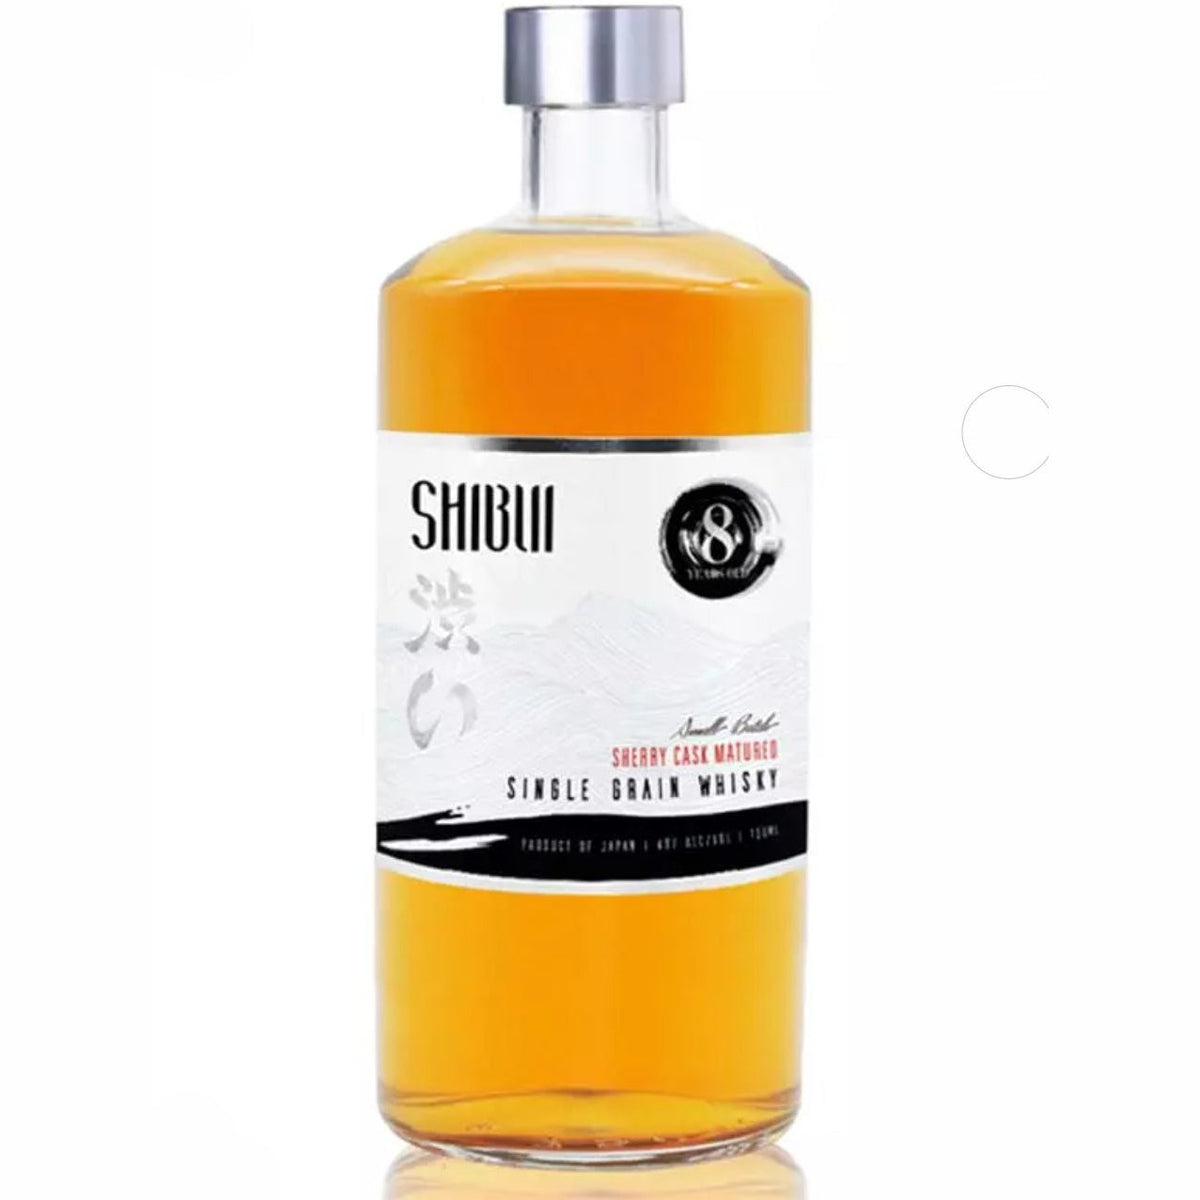 Shibui Single Grain Small Batch Sherry Cask 8 Year Old Japanese Whisky 750ml